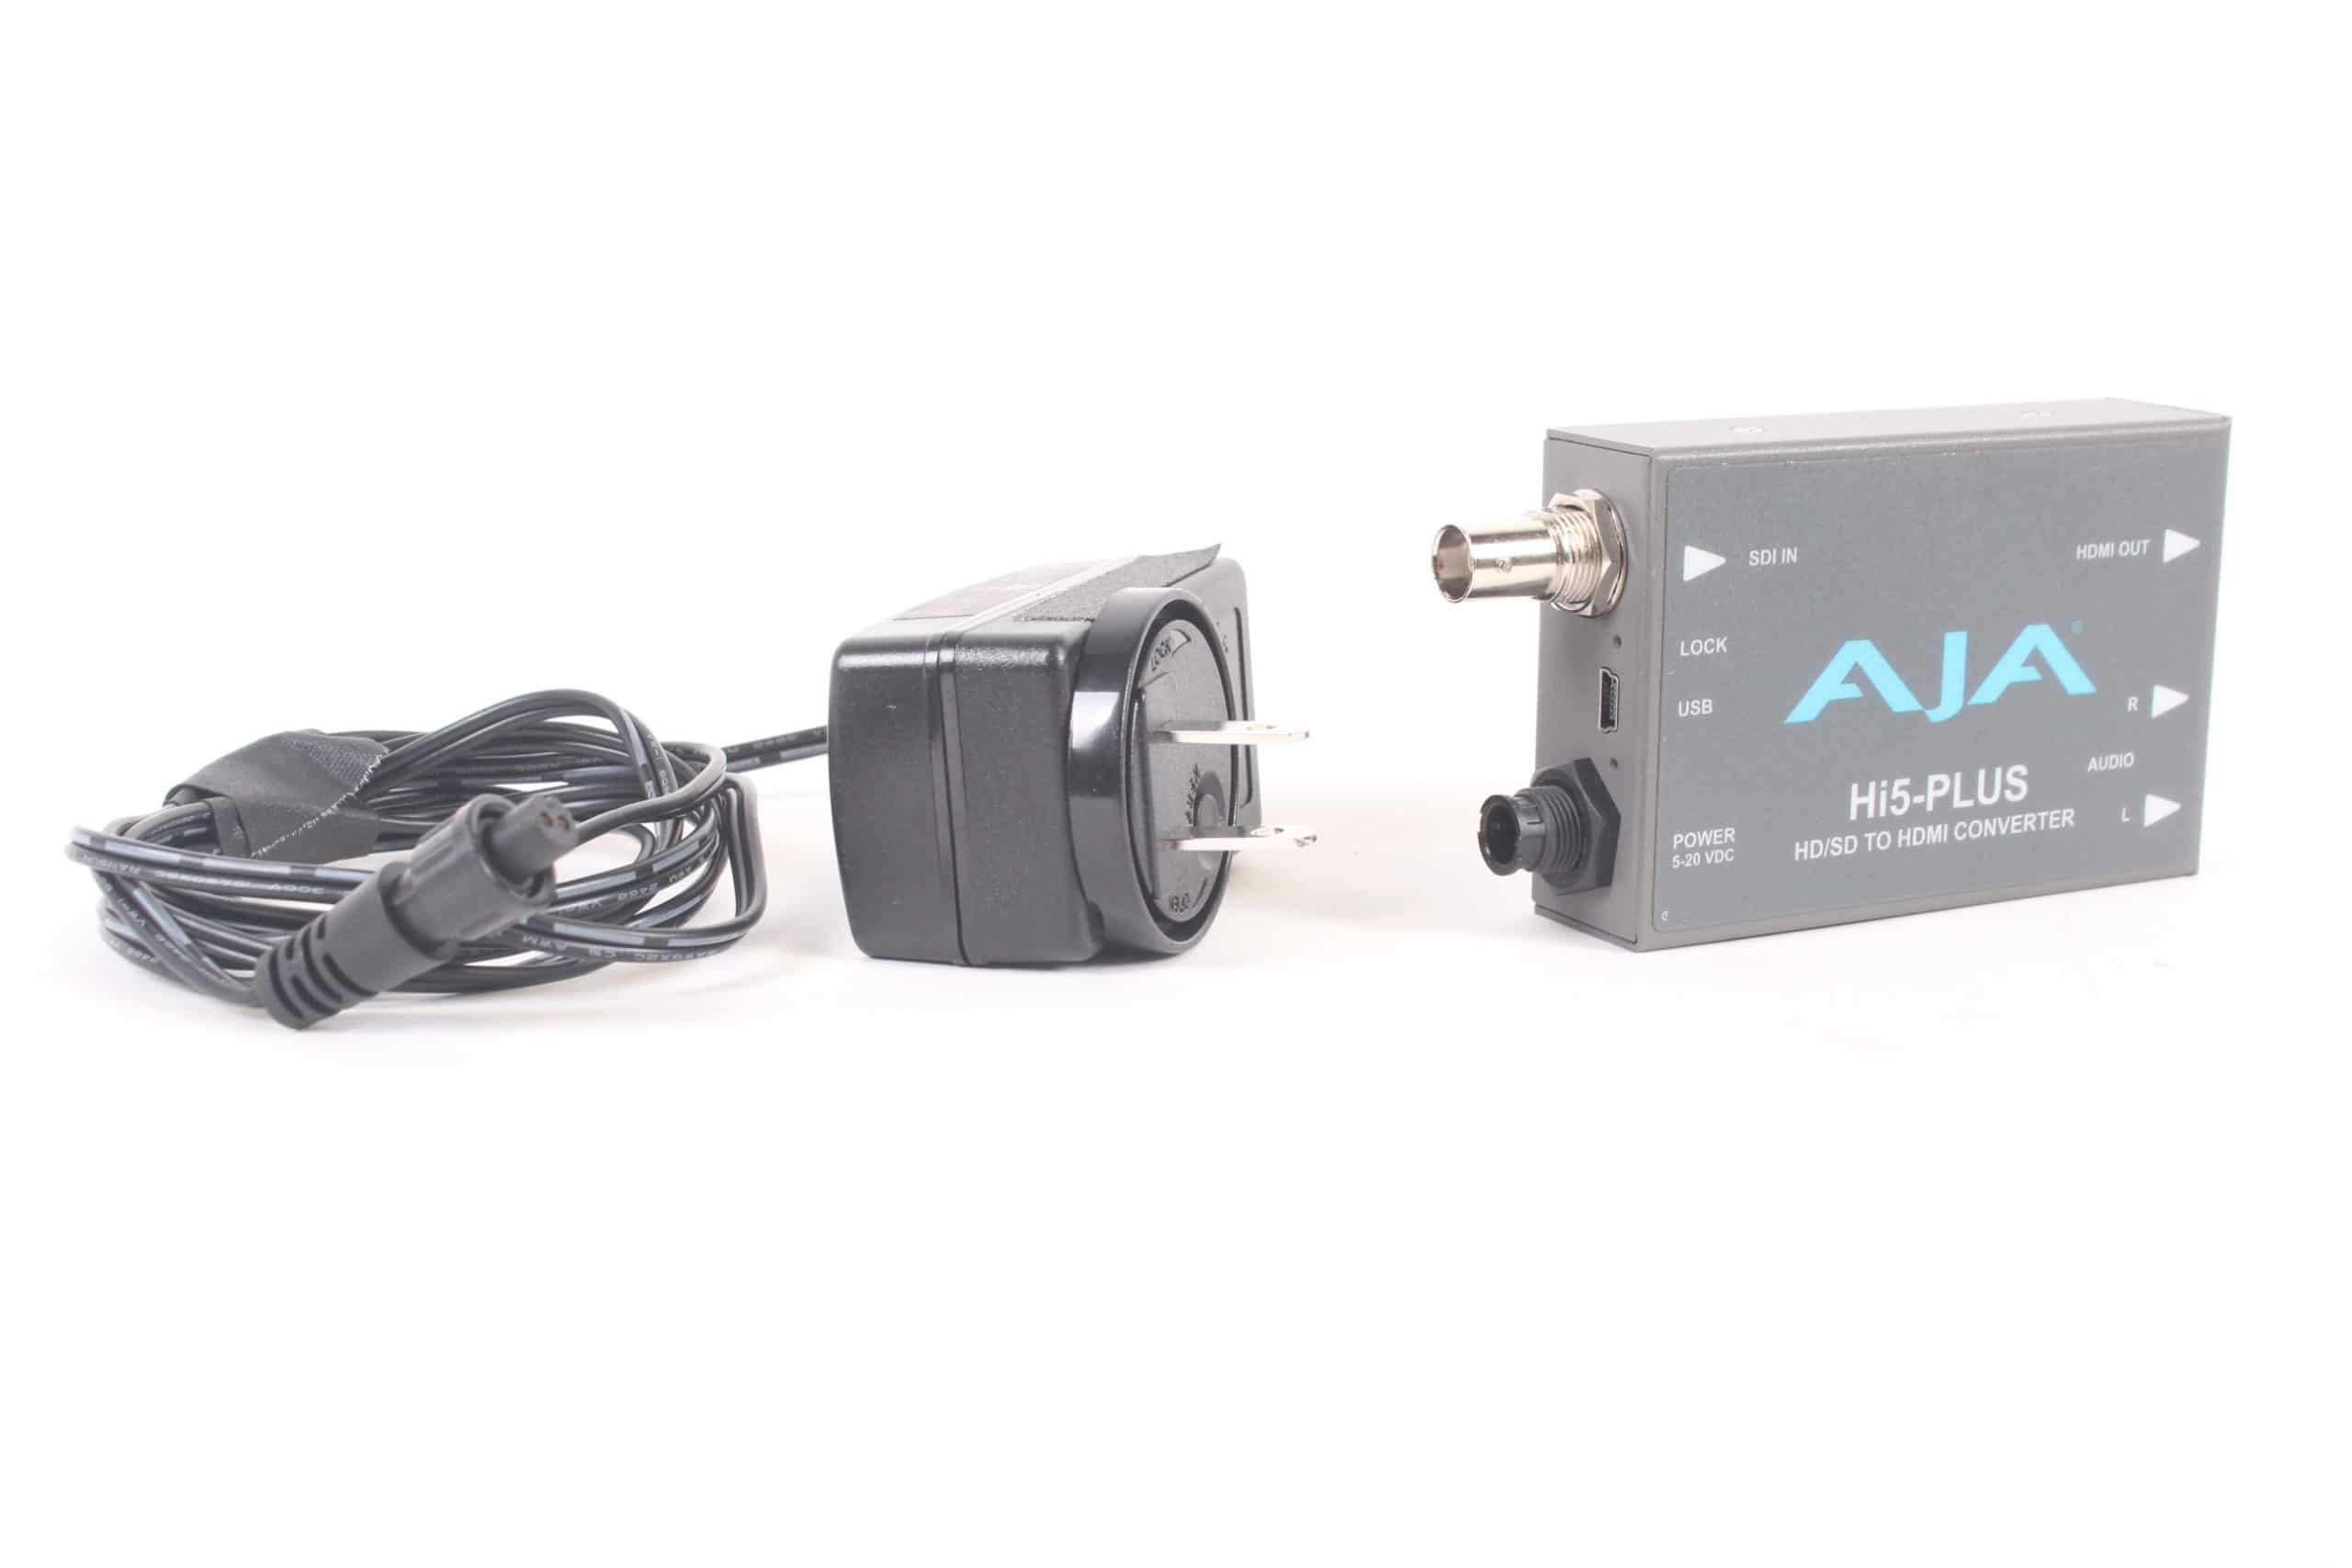 AJA Hi5-PLUS HD/SD To HDMI Video and Audio Converter